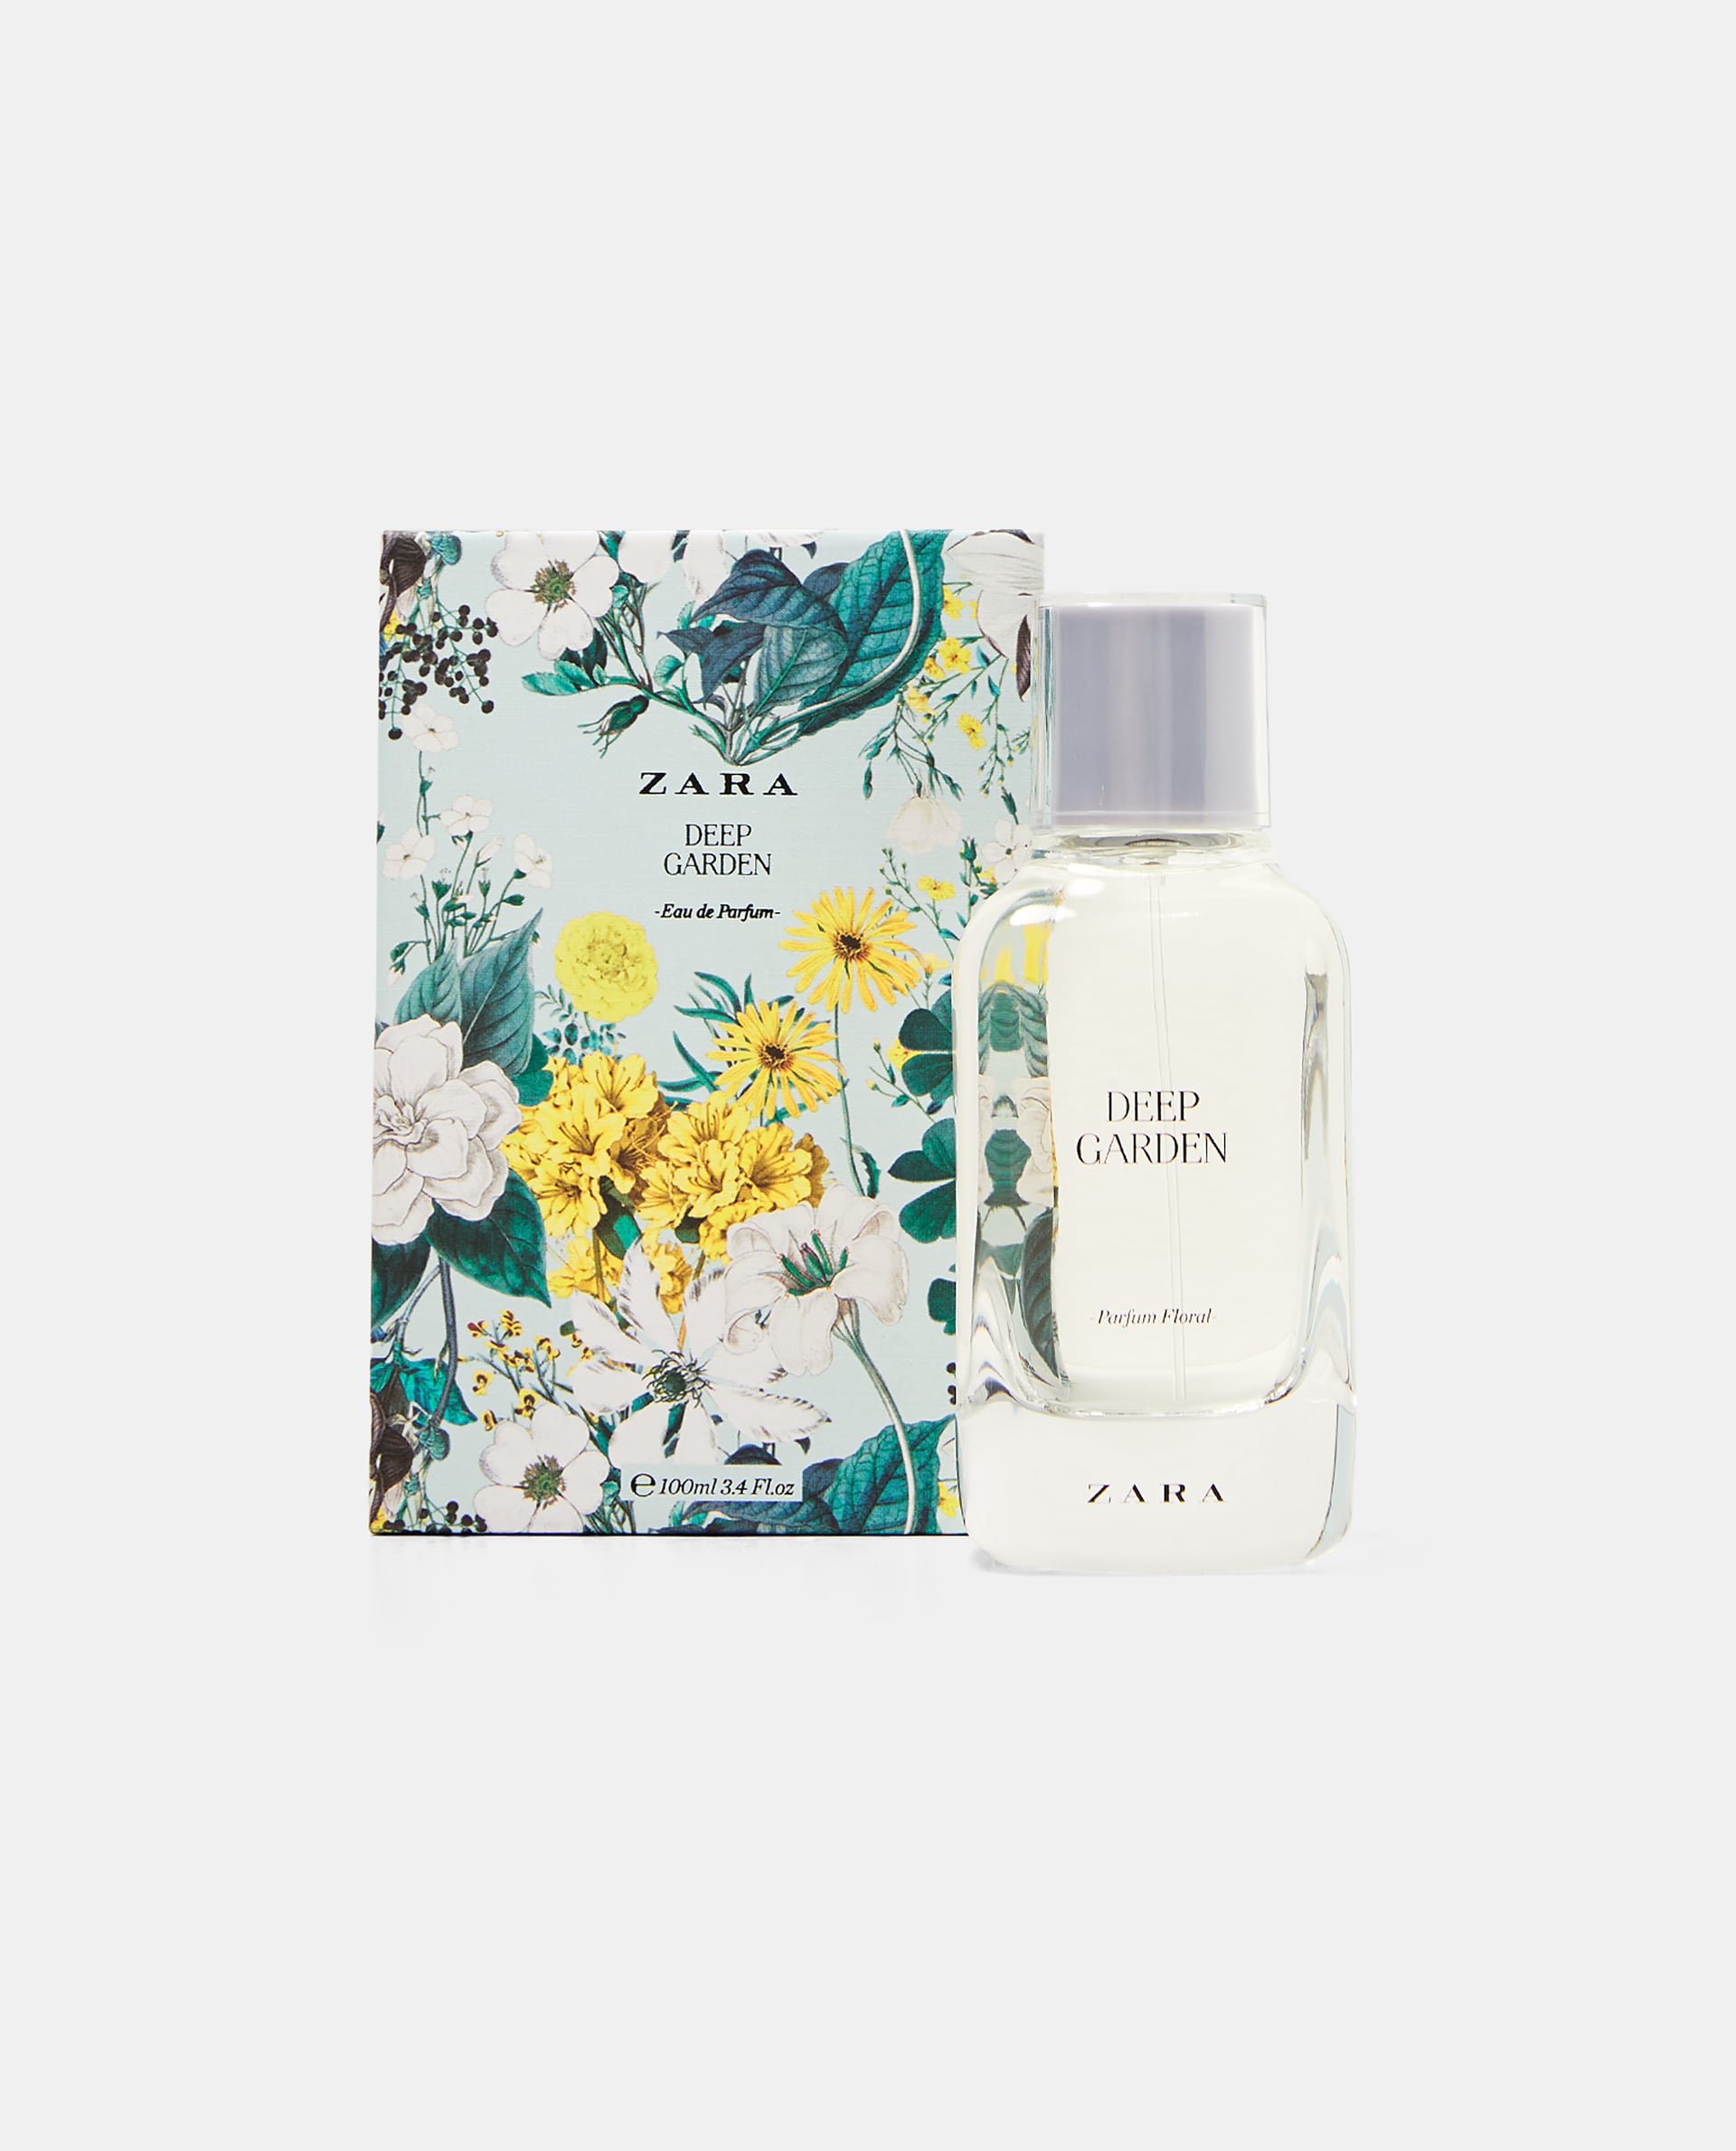 zara lightly bloom perfume